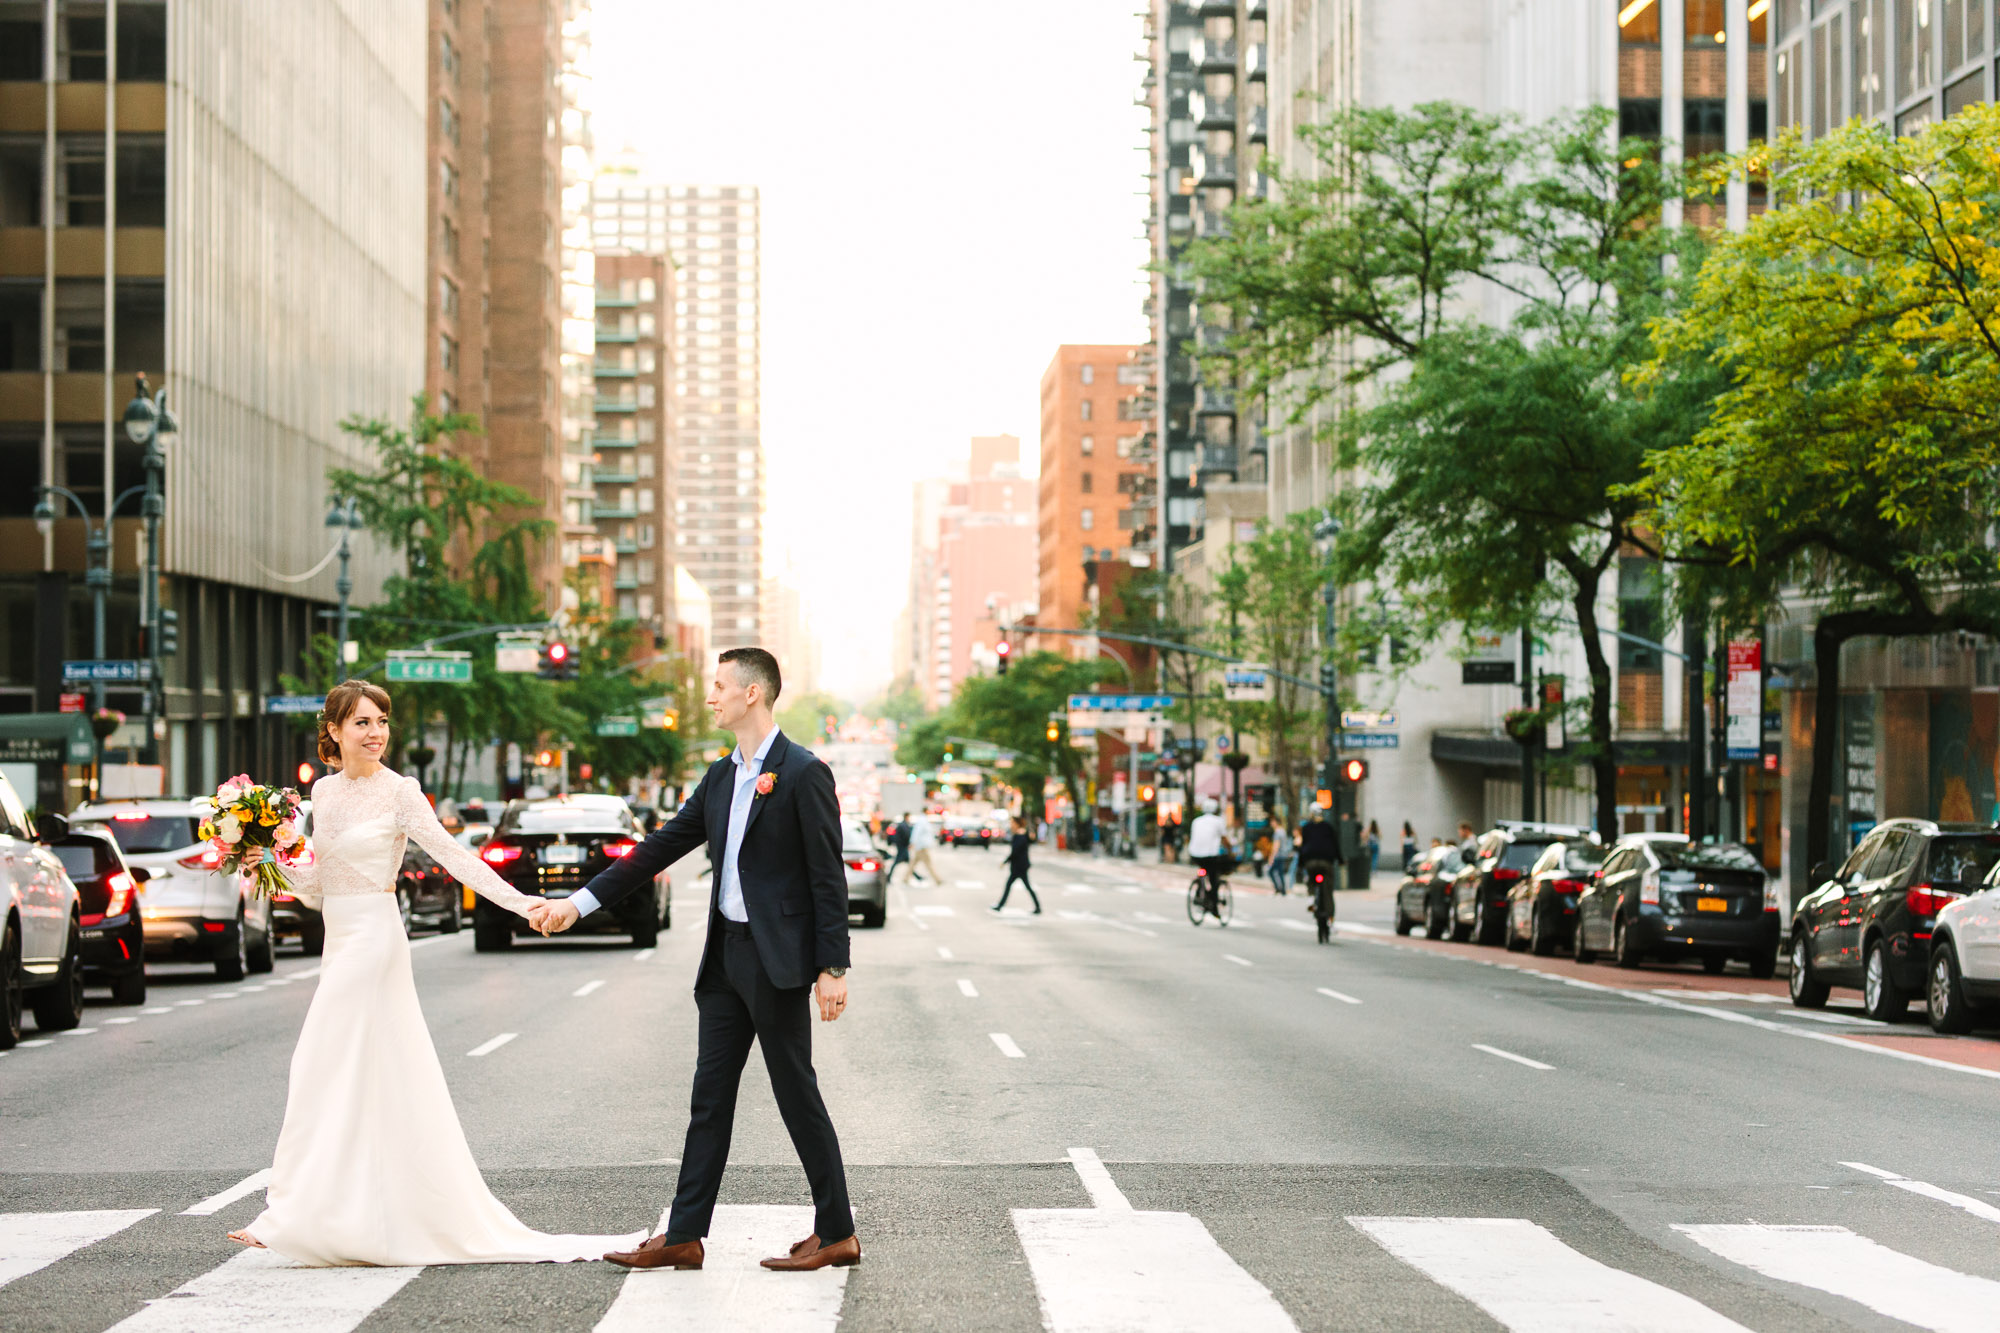 Bride and groom in NYC crosswalk - www.marycostaweddings.com